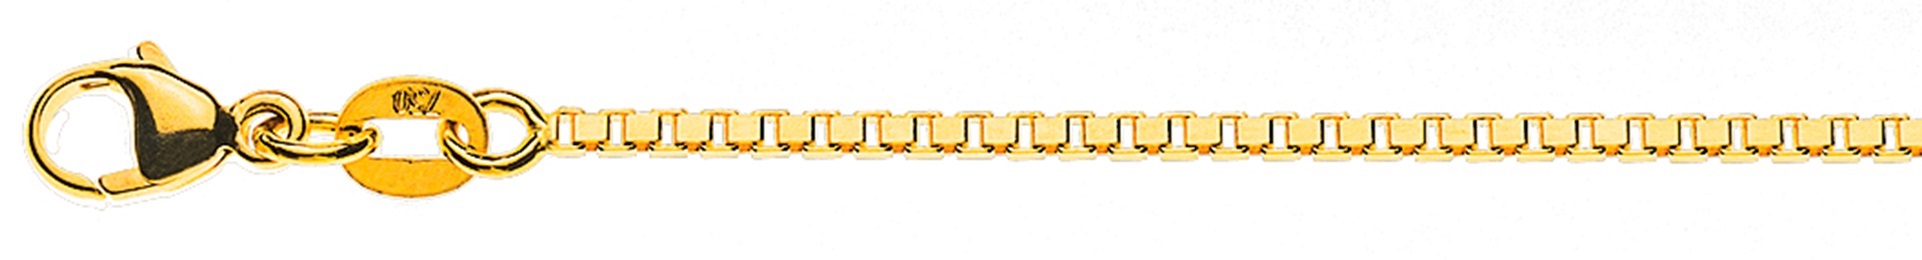 AURONOS Style Necklace yellow gold 9K Venetian chain diamond cut 50cm 1.4mm